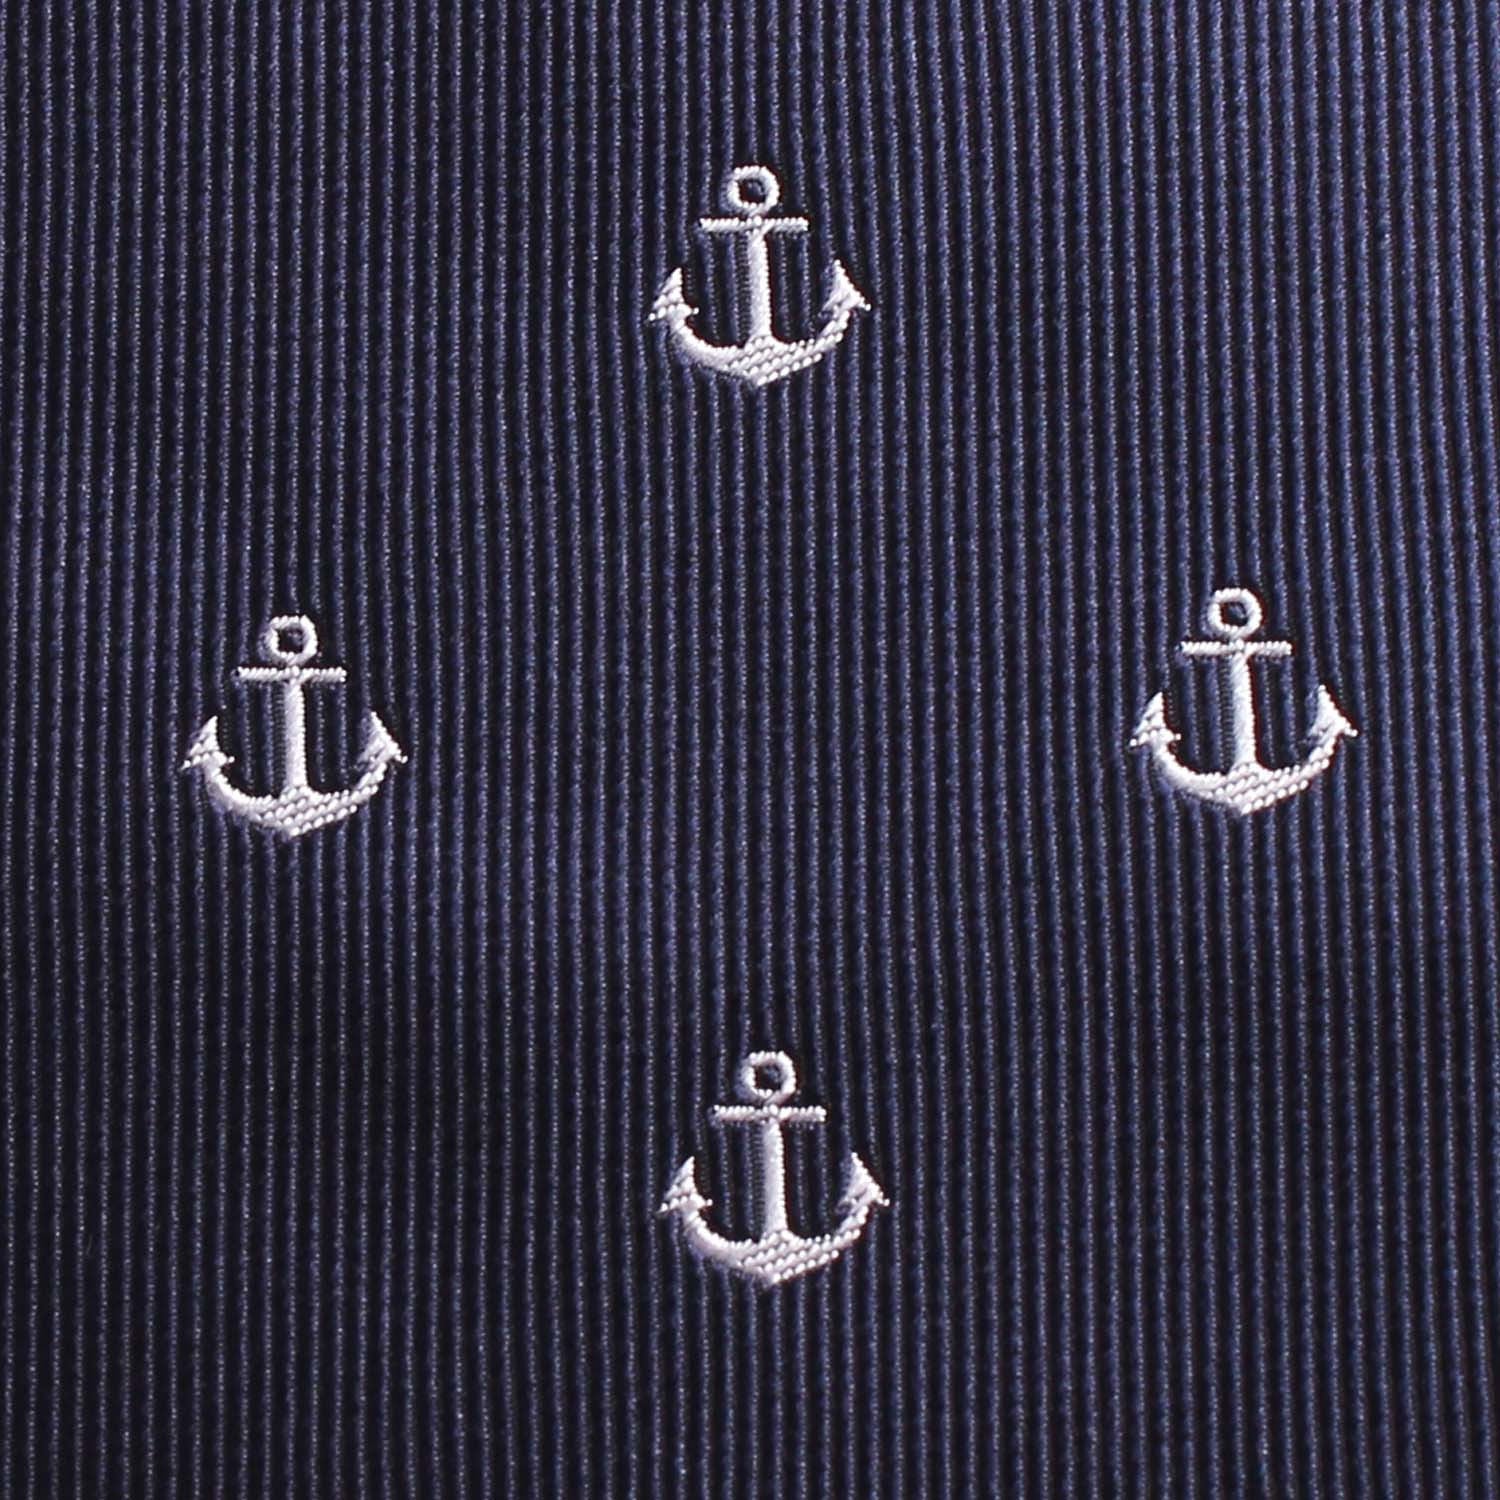 The OTAA Navy Blue Anchor Fabric Self Tie Diamond Tip Bow Tie M044